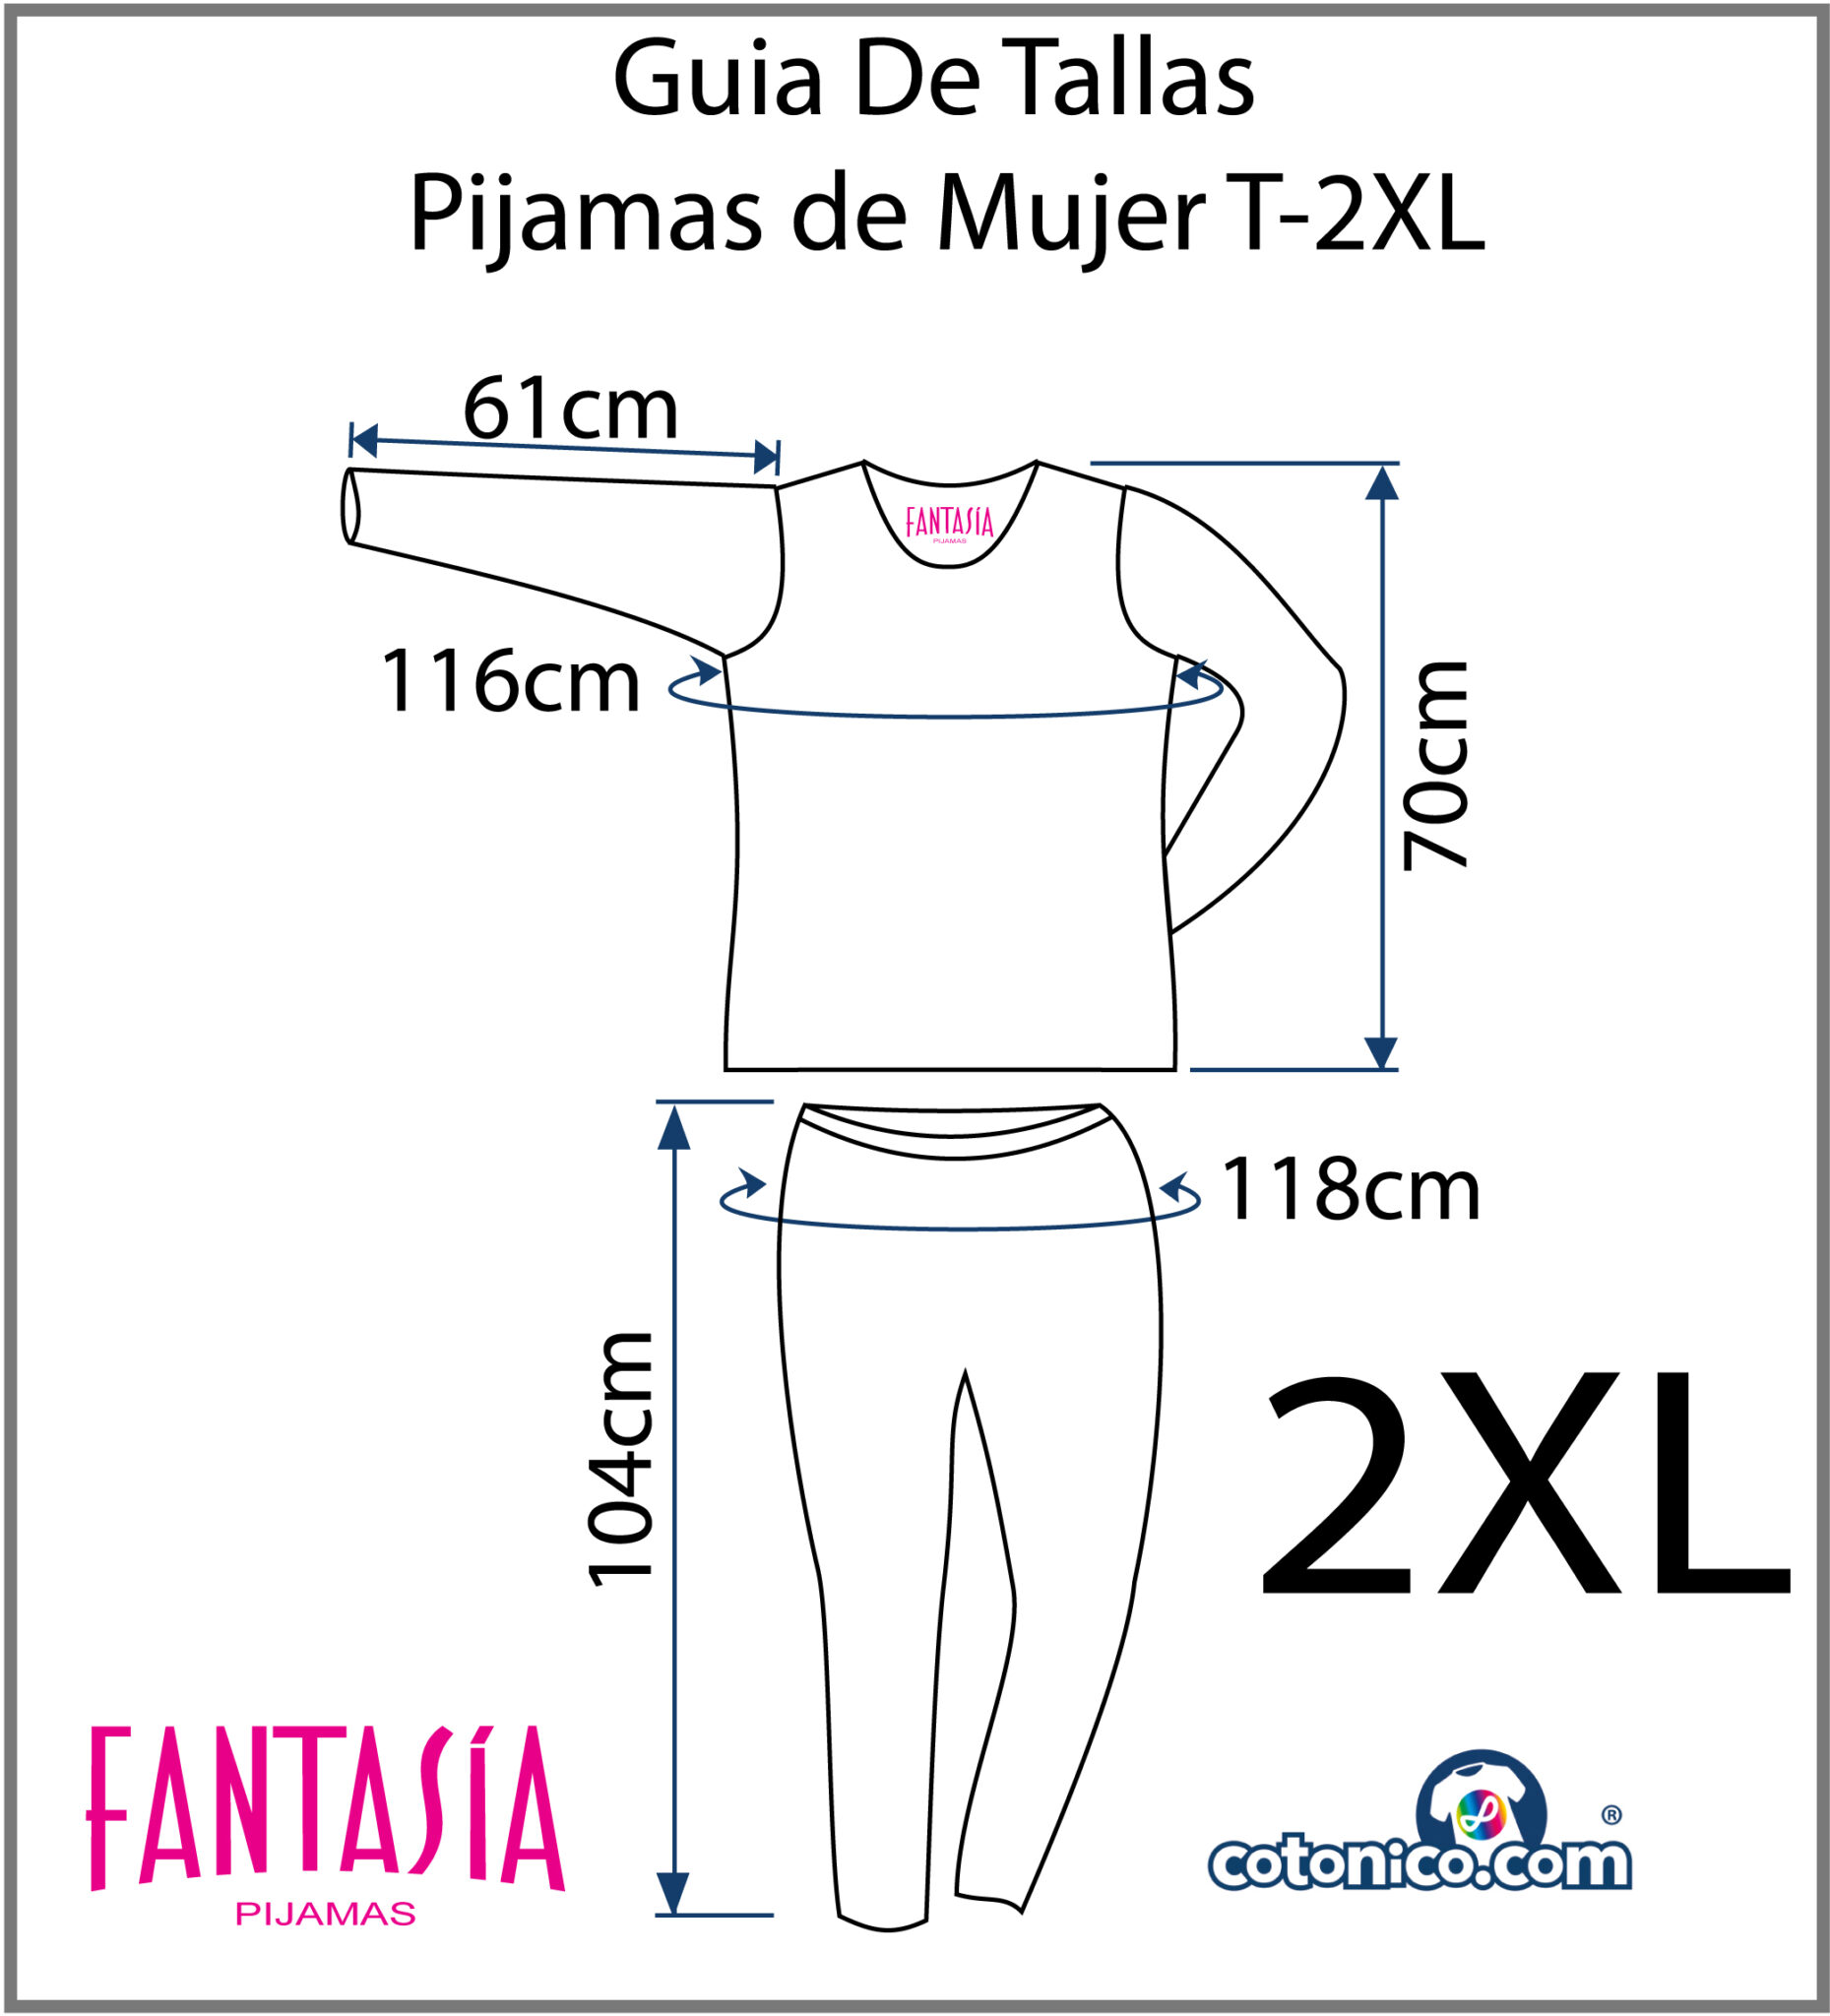 Guia-De-Tallas-Pijamas-De-Mujer-2XL